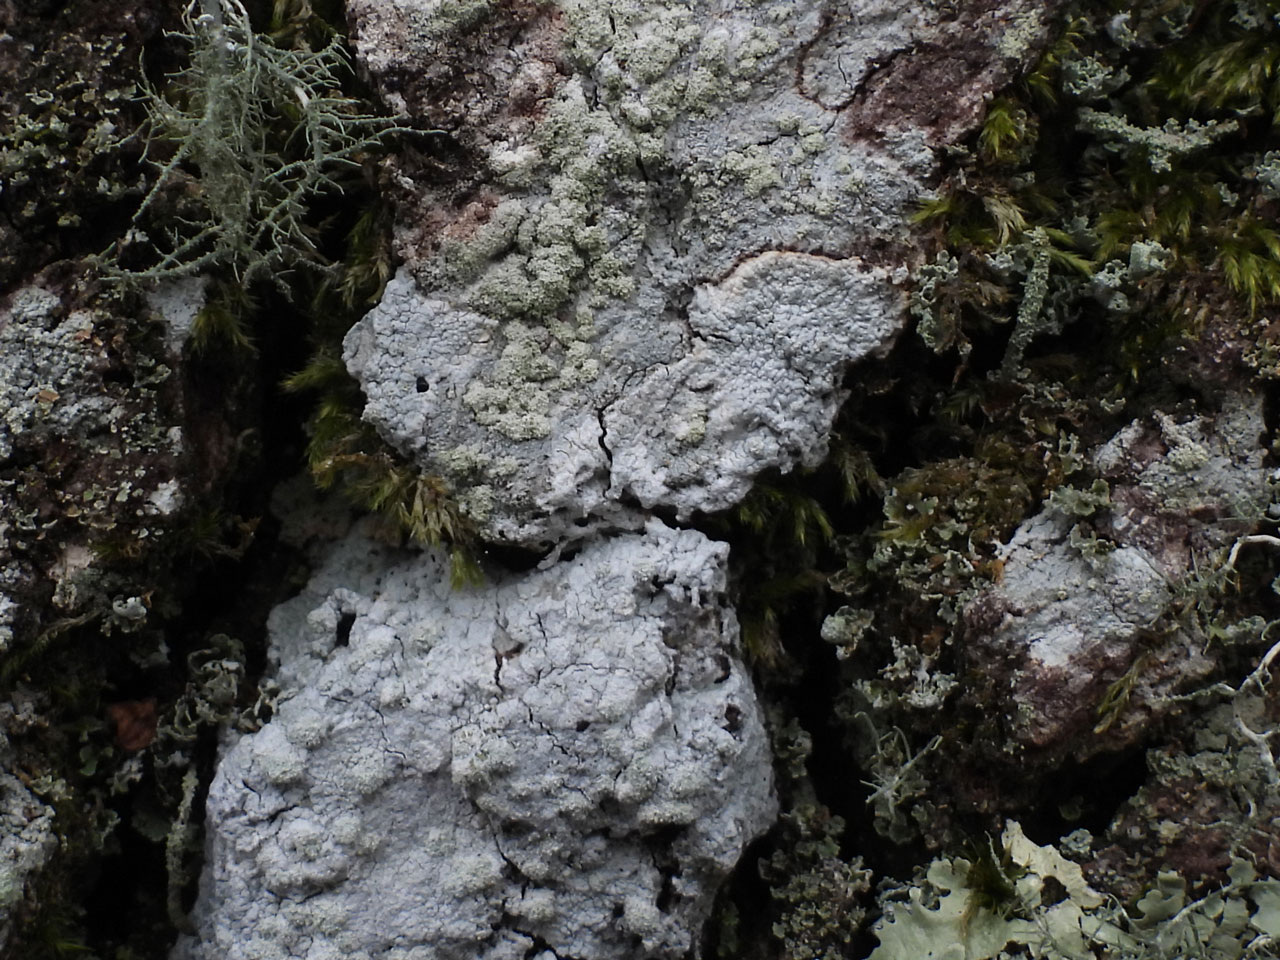 Loxospora elatina & Varicellaria hemisphaerica, Oak, Vinney Ridge, New Forest 